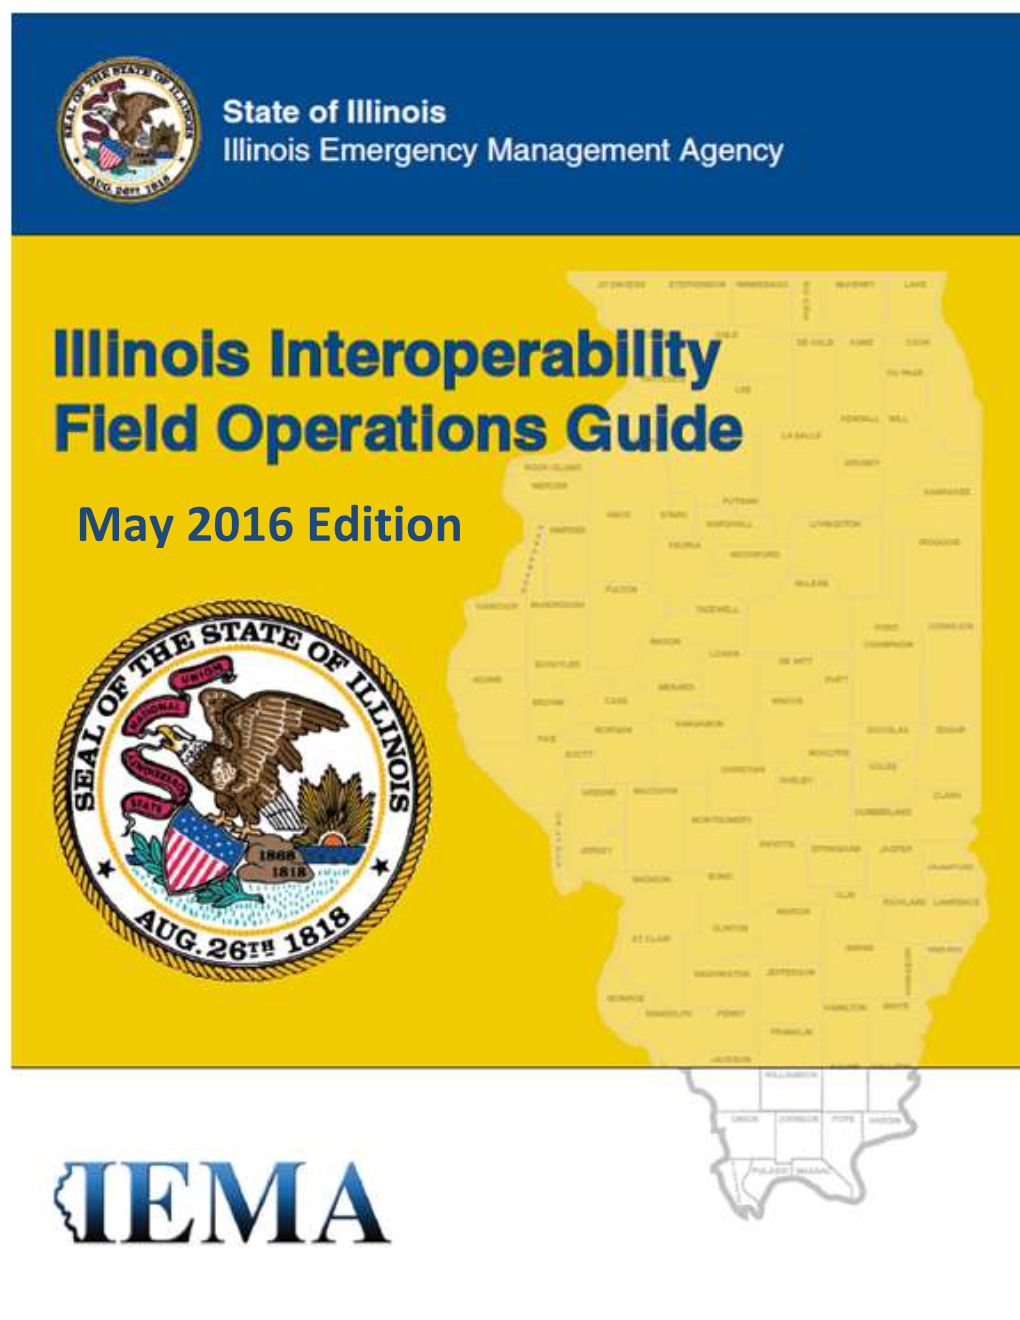 2016 Illinois Interoperability Field Operations Guide